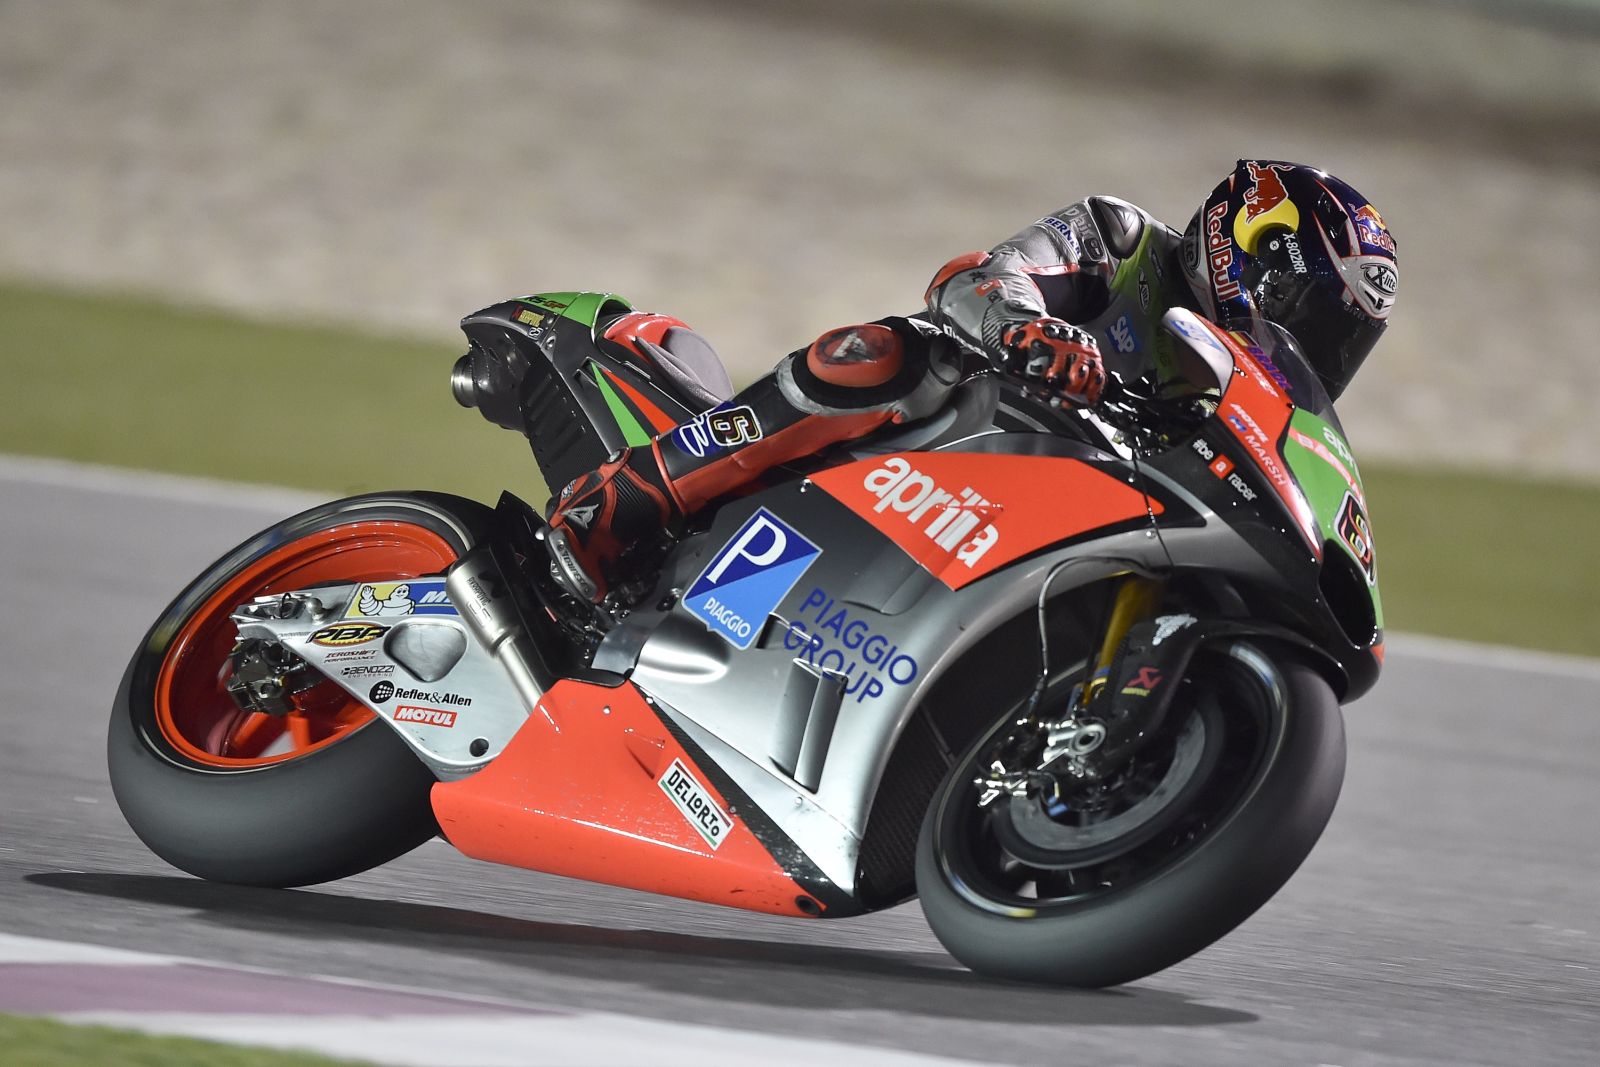 2016 Grand Prix motorcycle racing kick-starts in Qatar ...